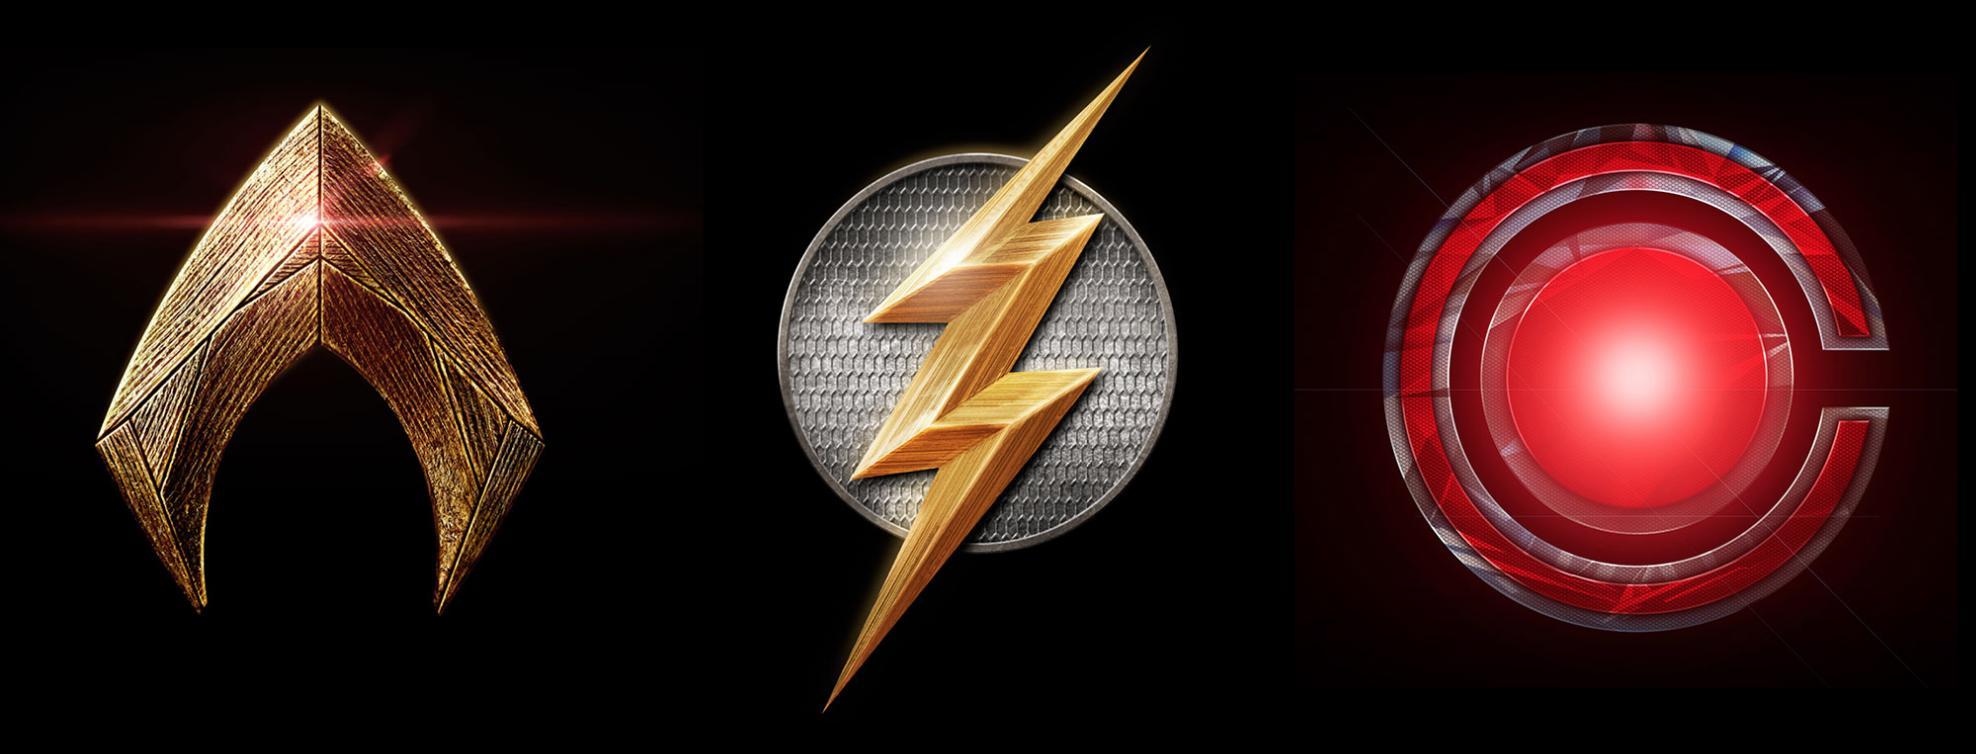 DC Cyborg Logo - Flash, Cyborg and Aquaman logos : DC_Cinematic